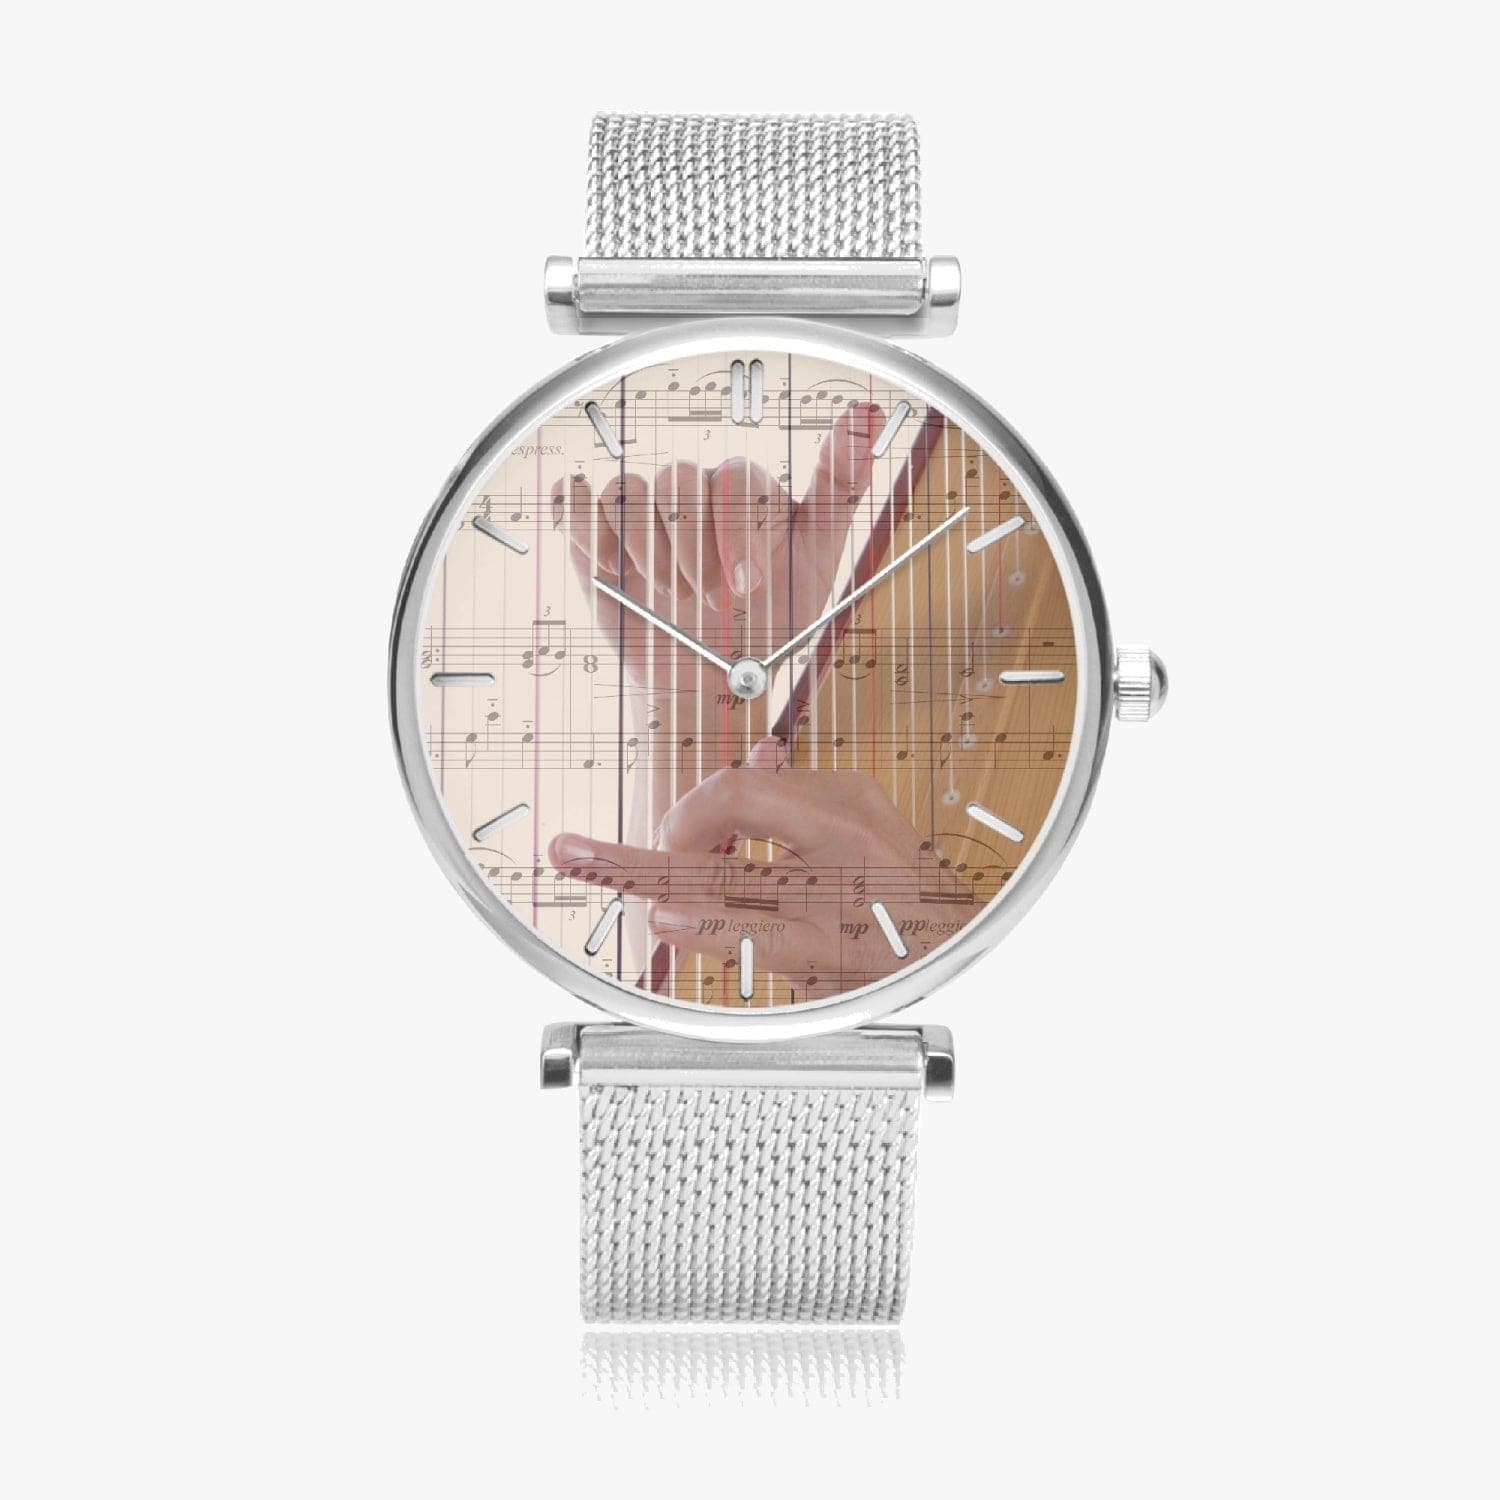 Tango for harp. New Stylish Ultra-Thin Quartz Watch (With Indicators) Designer watch by Ingrid Hütten